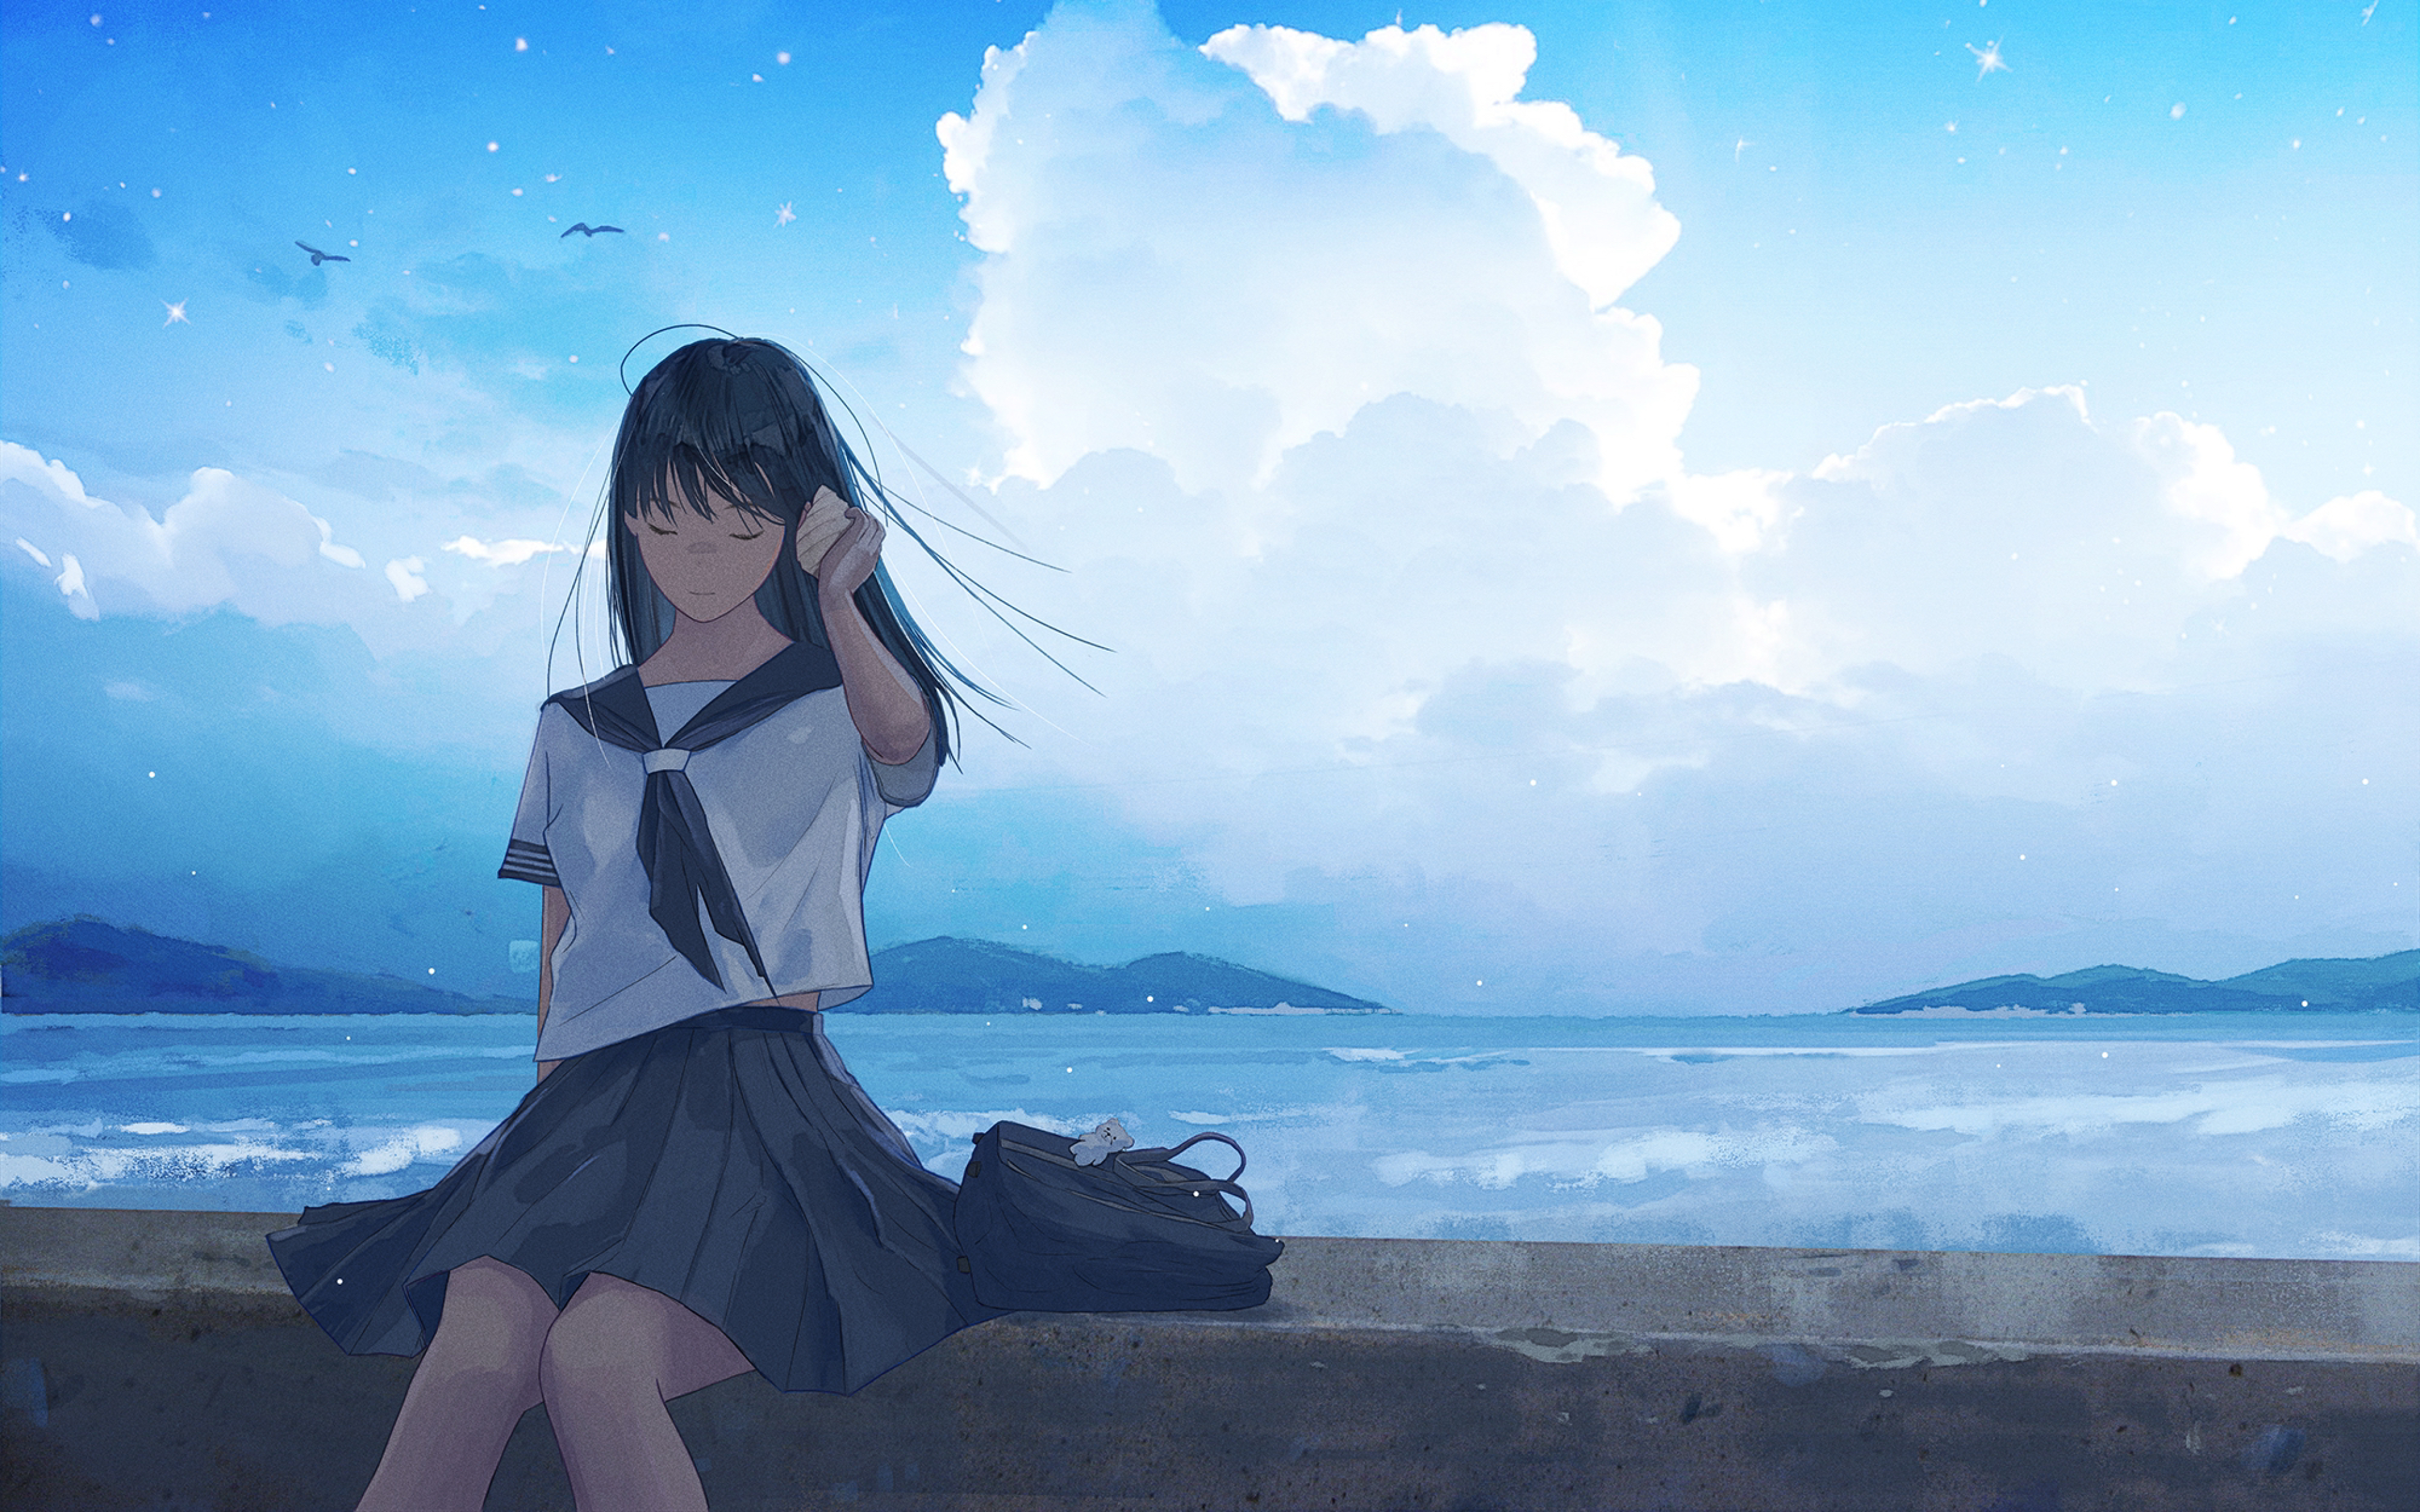 Wallpaper ID 1226890  anime girl ocean 1080P school uniform  landscape Anime buildings white hair back view free download